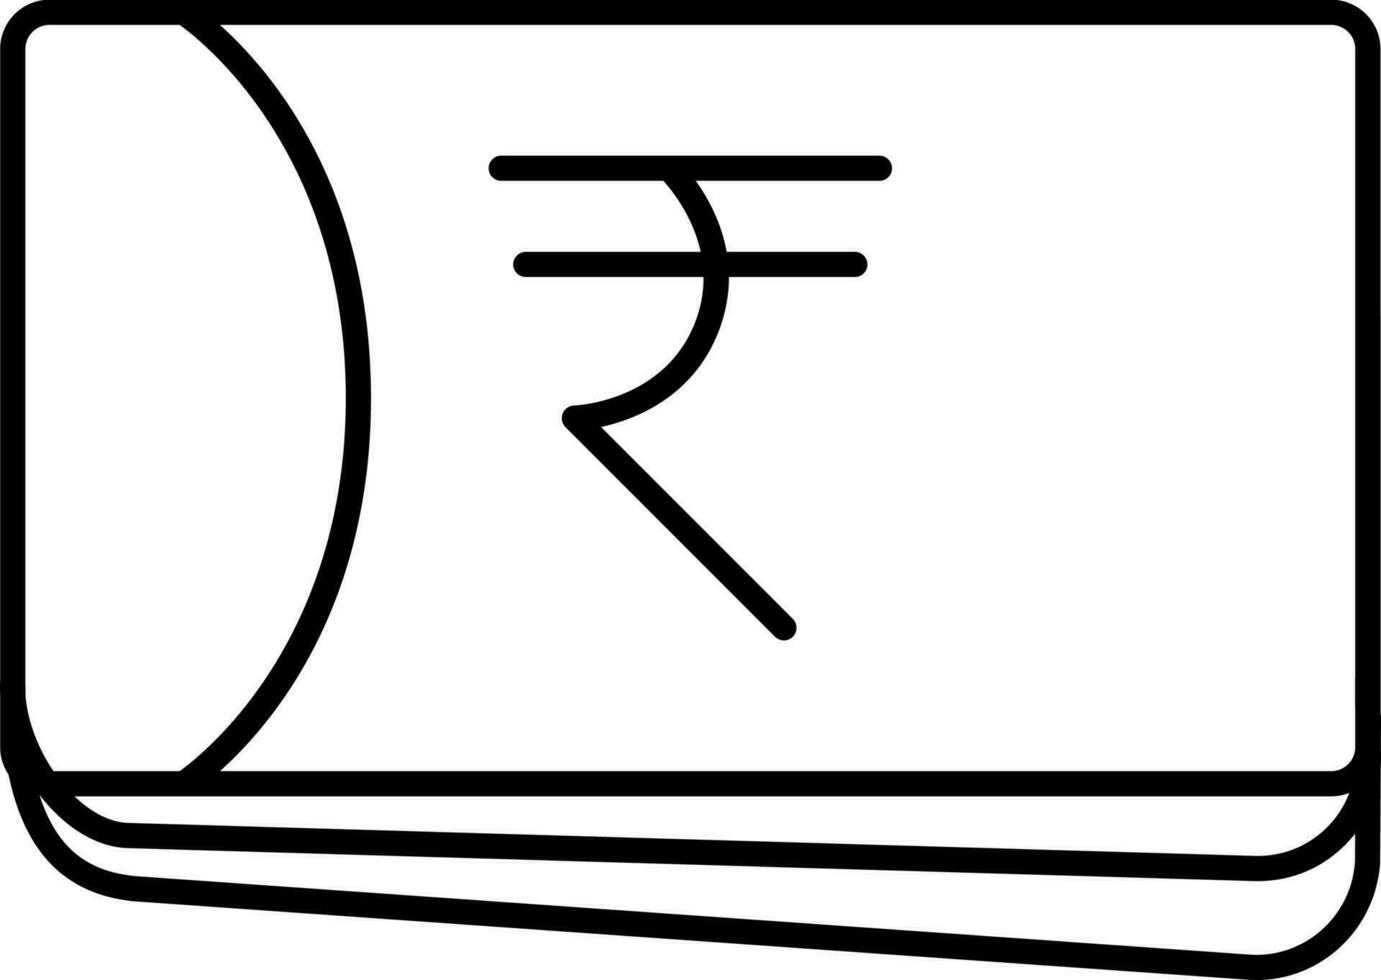 indio rupia billetes símbolo. vector